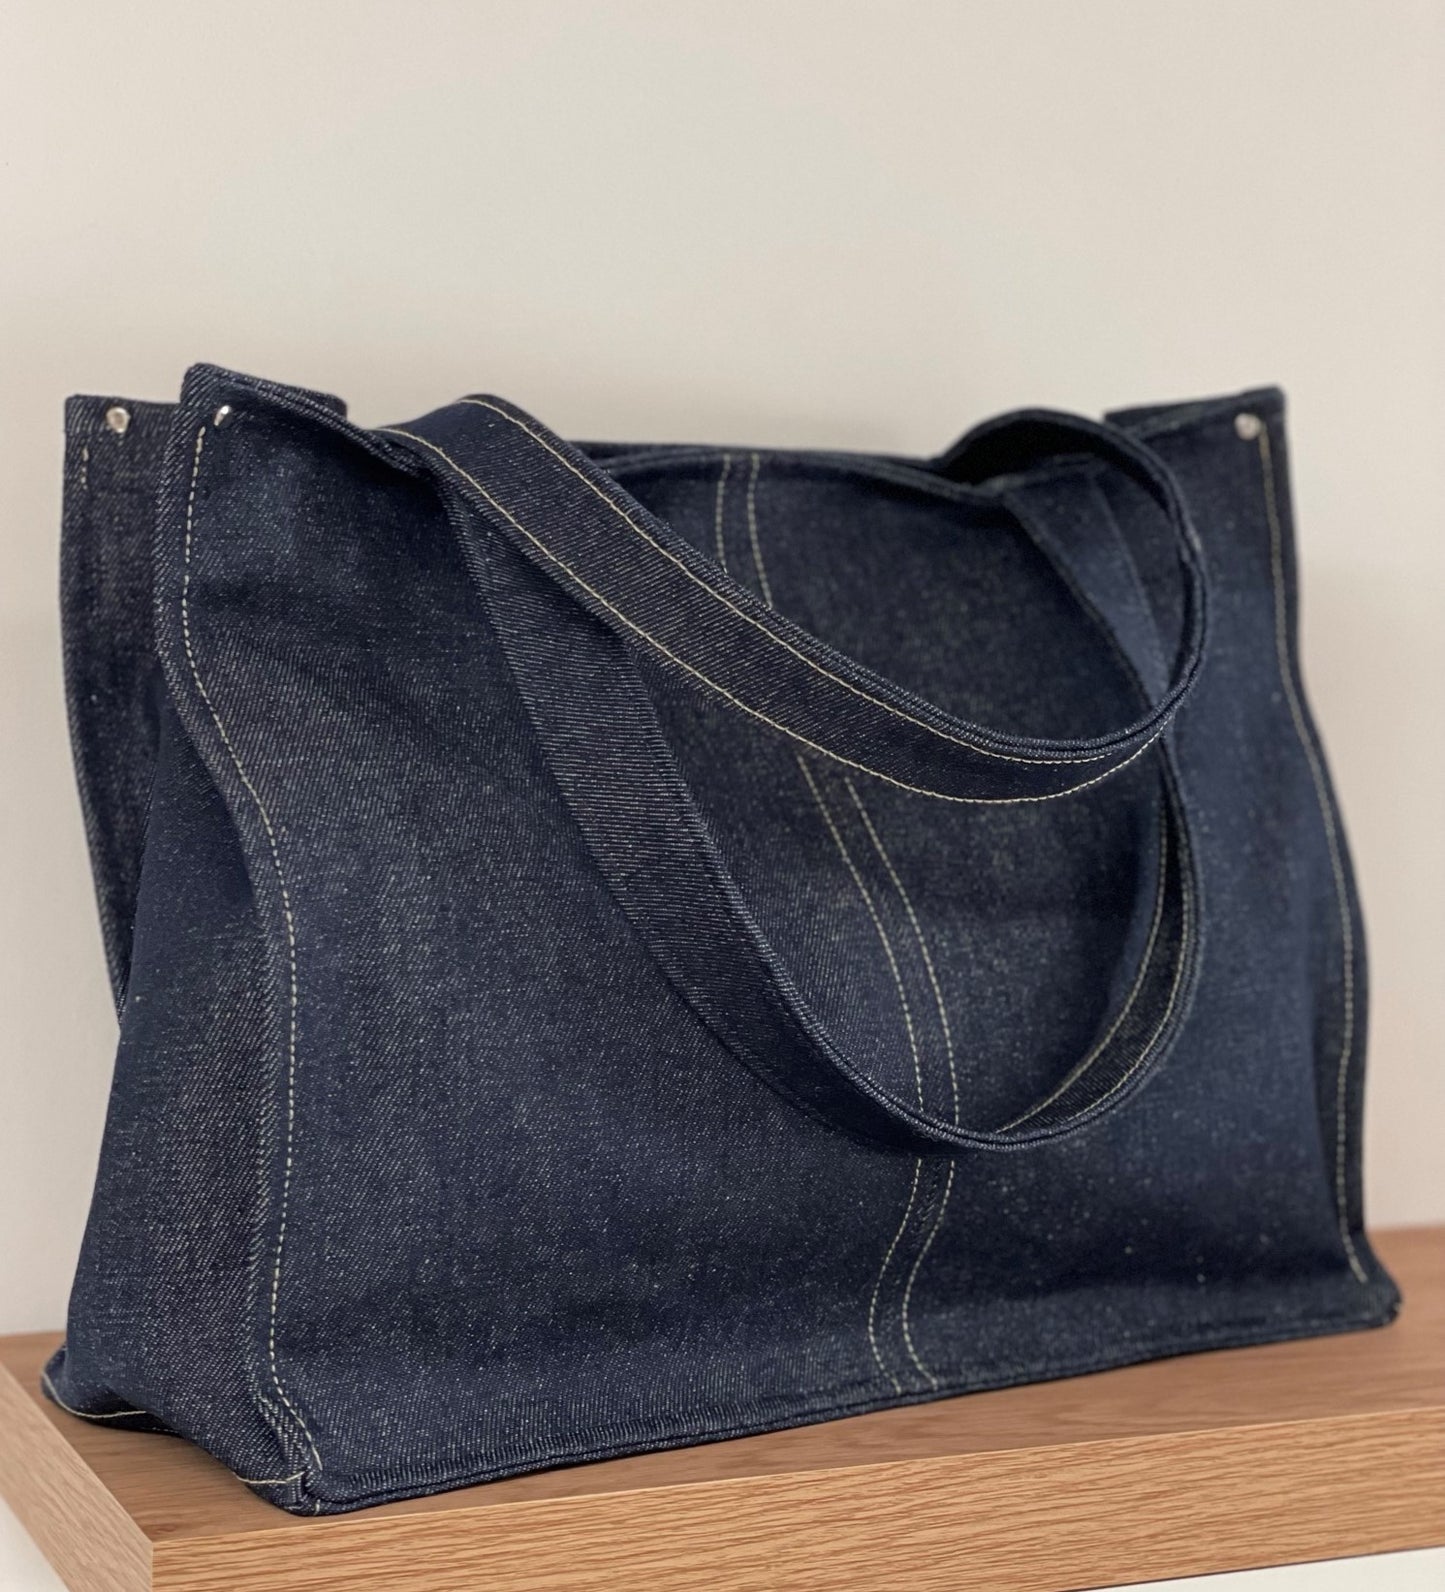 The Denim Shopper bag